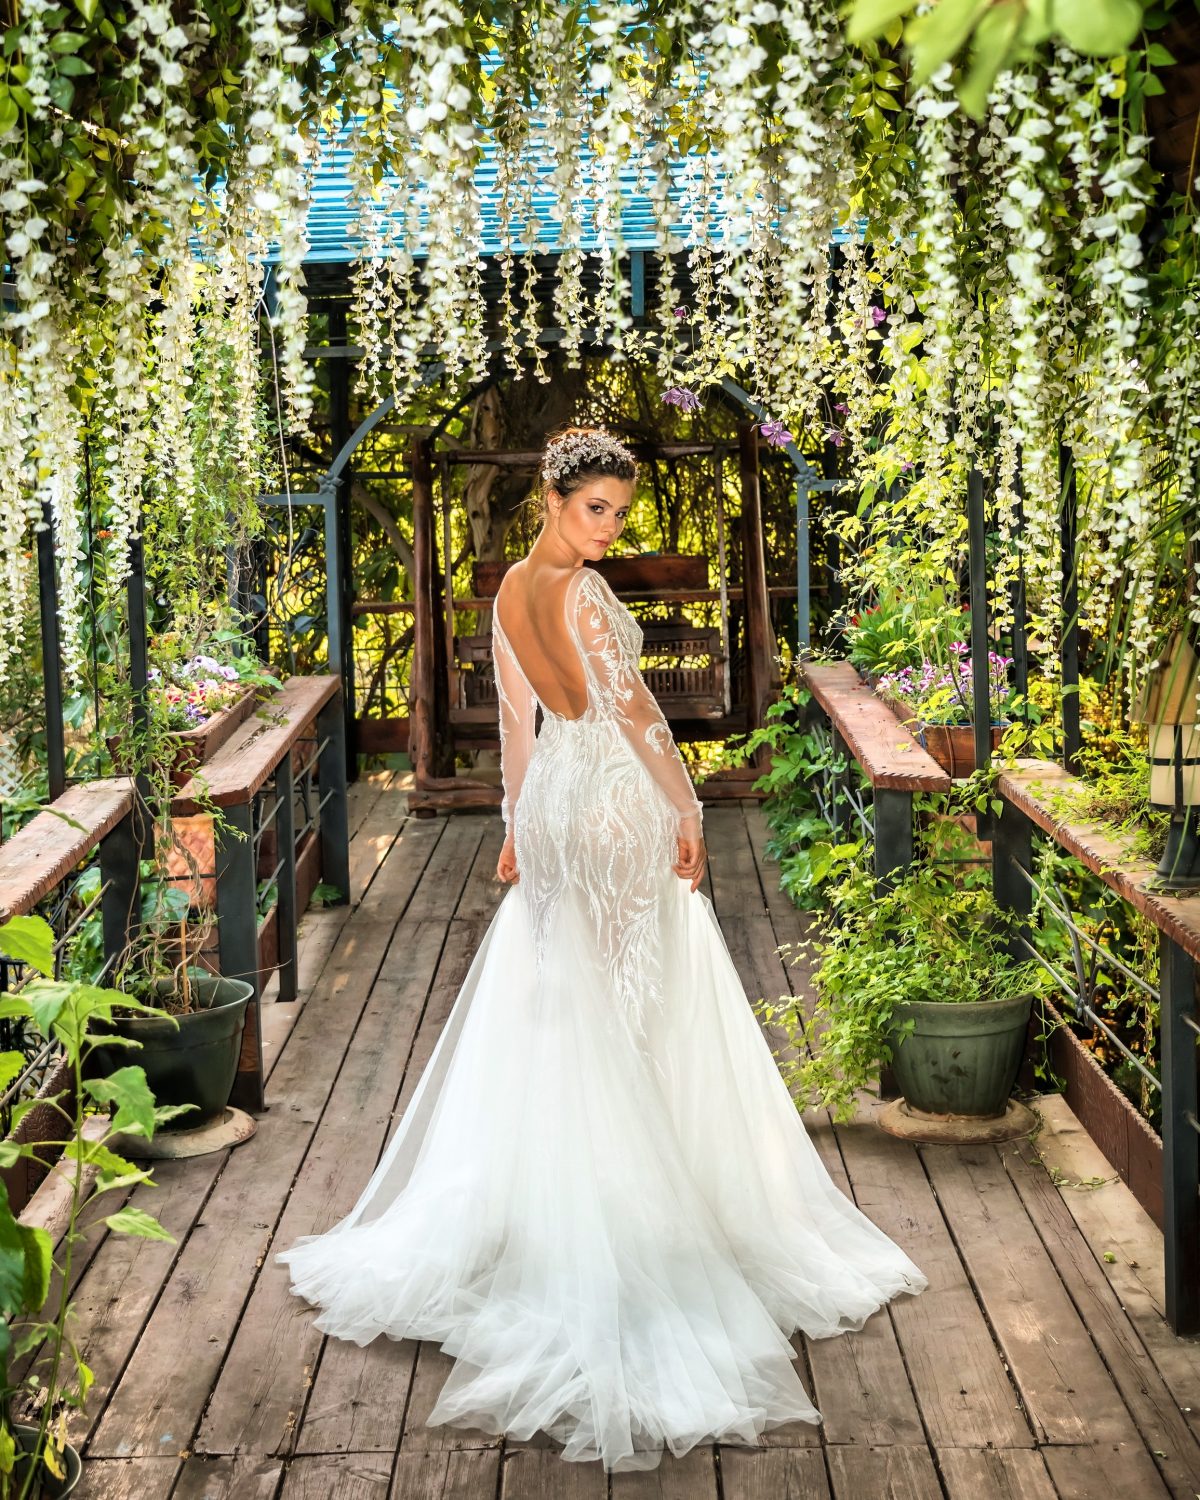 //weddingdc.in/wp-content/uploads/2020/04/woman-in-white-wedding-gown-standing-on-brown-wooden-pathway-3739003-1-1200x1500.jpg